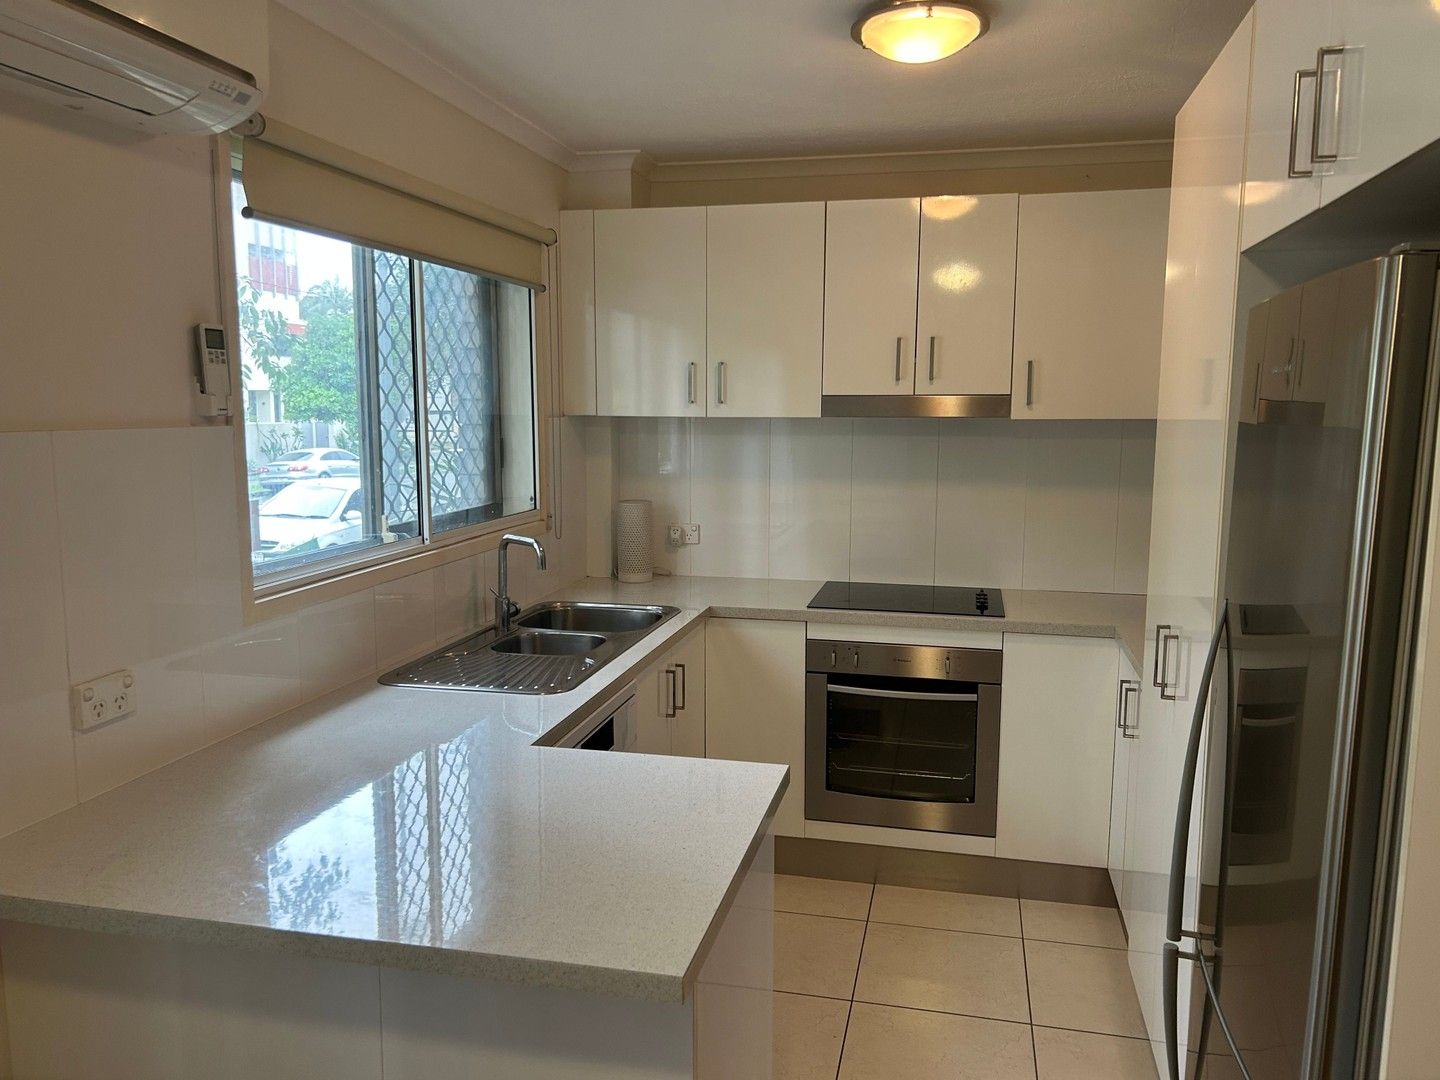 2 bedrooms Apartment / Unit / Flat in UNIT 2/16 FIRST AVENUE BROADBEACH QLD, 4218